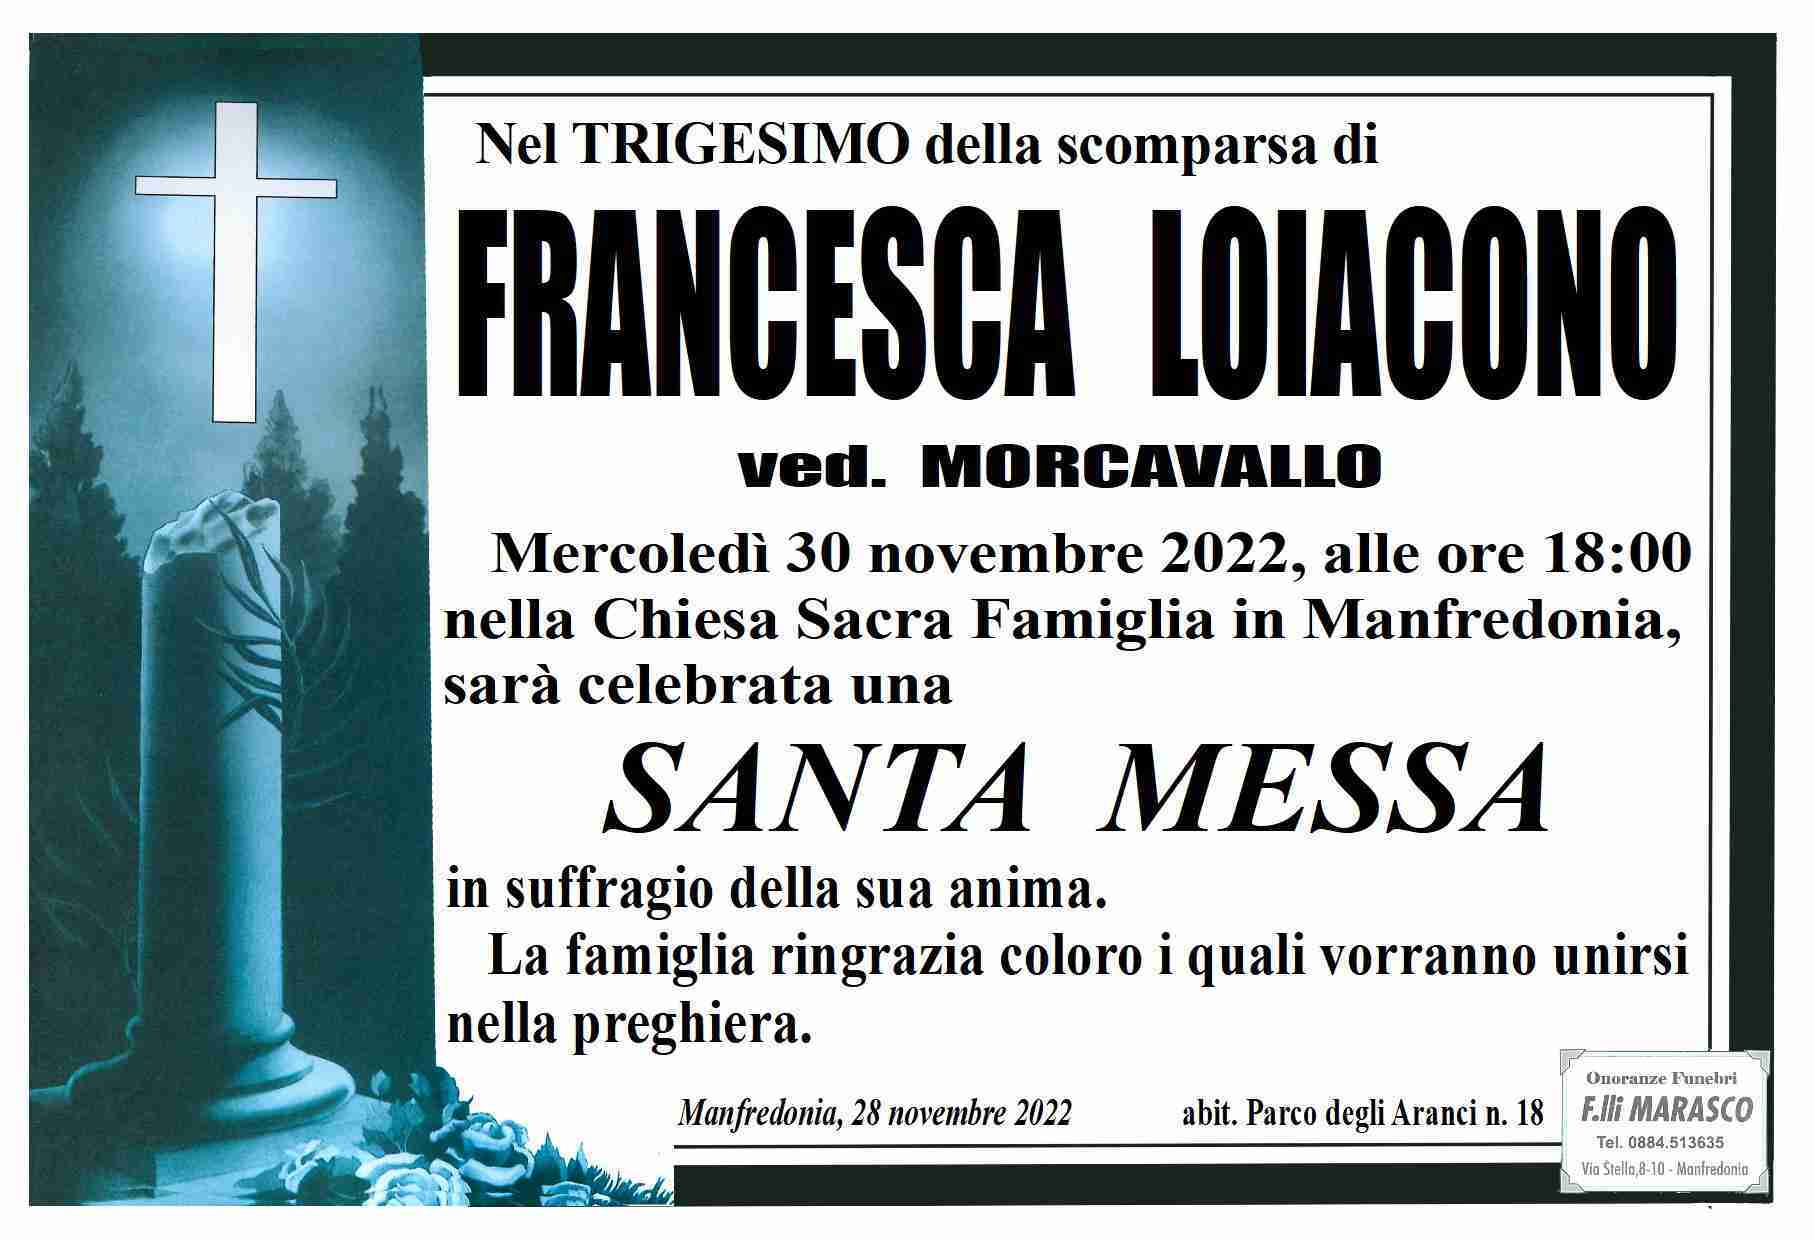 Francesca Loiacono